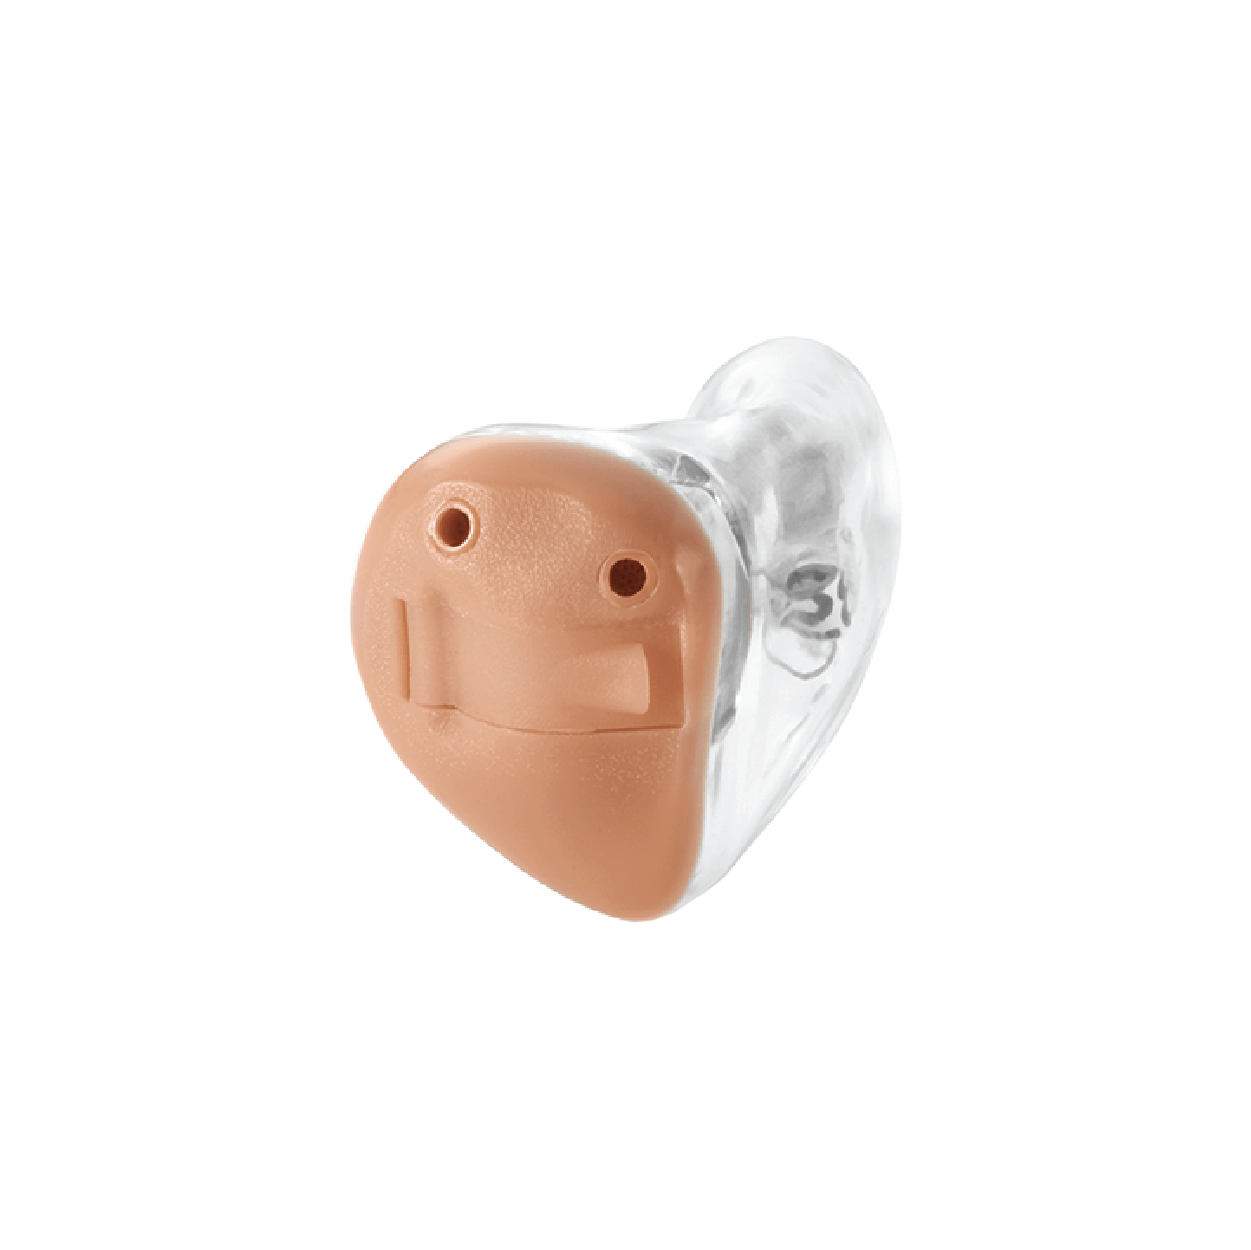 ITC hearing aids